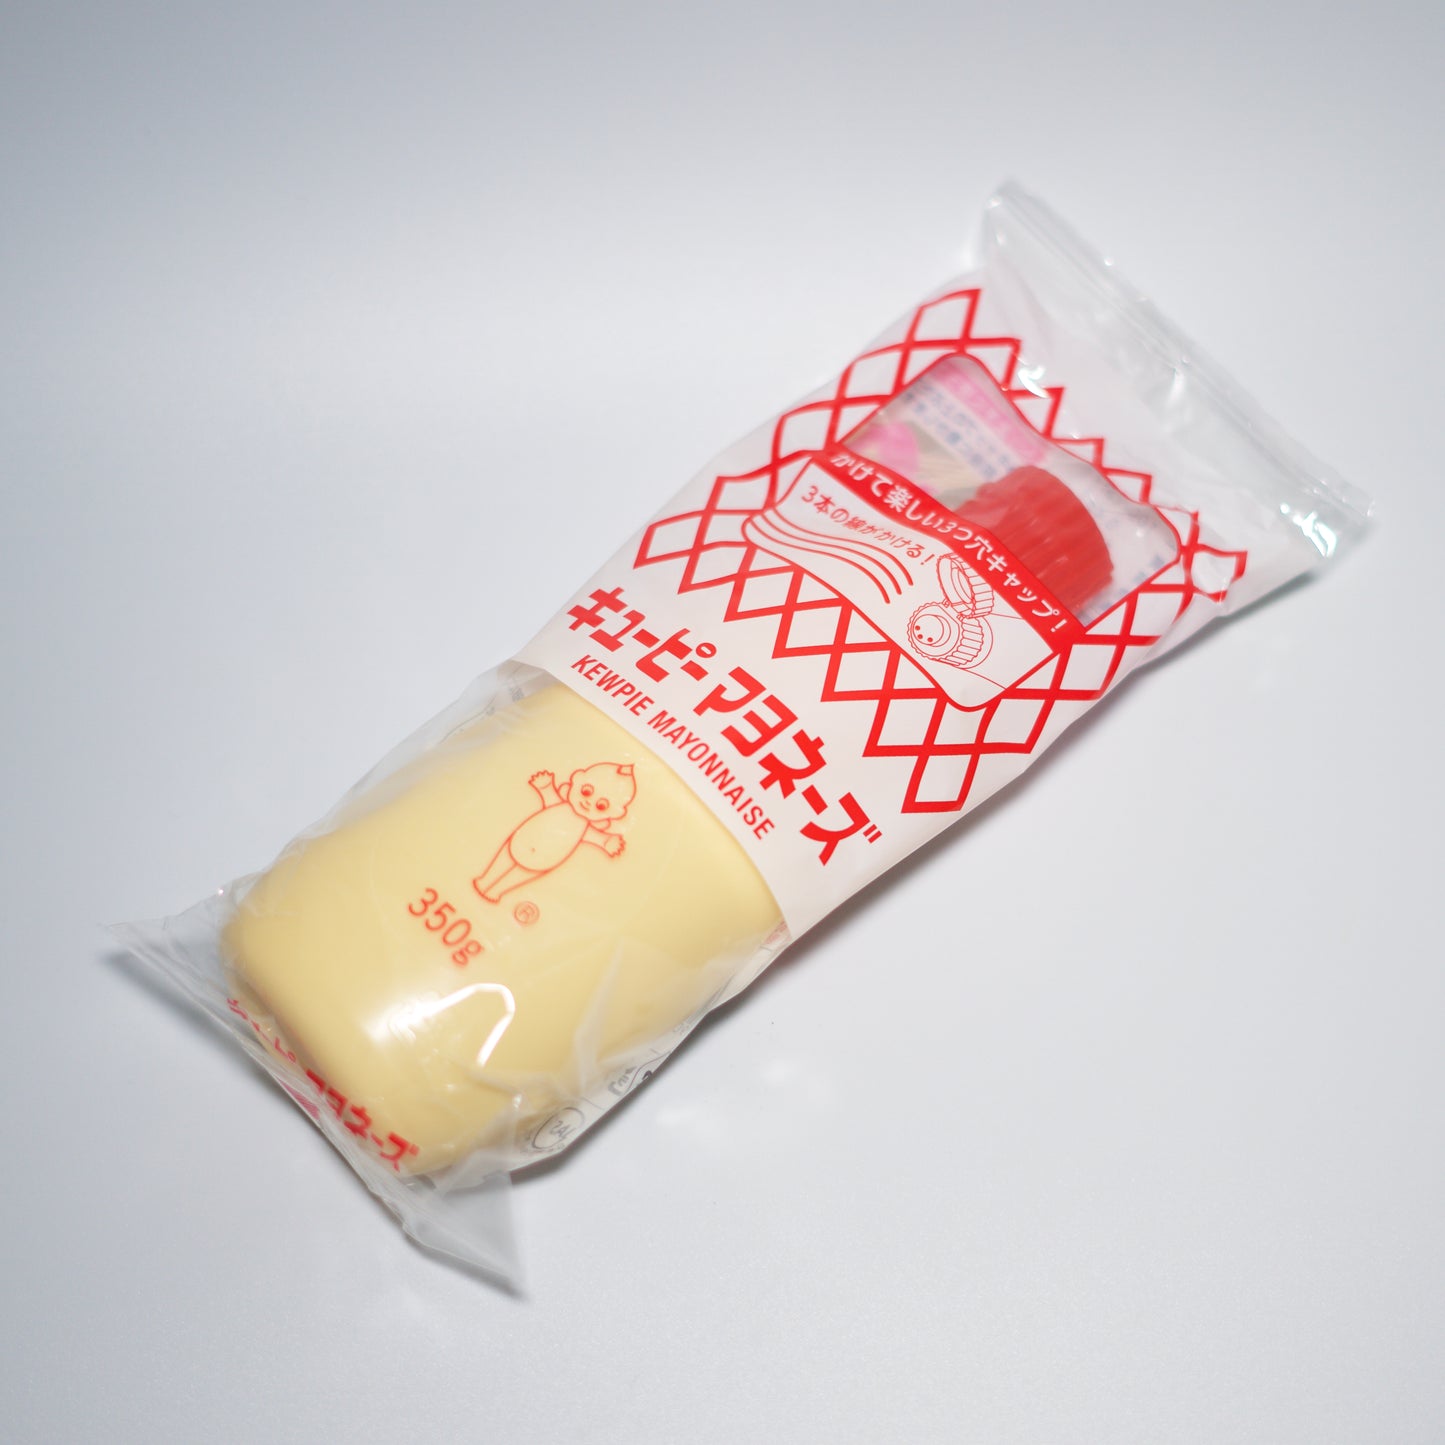 Expired - Kewpie (QP) Mayonnaise 350g